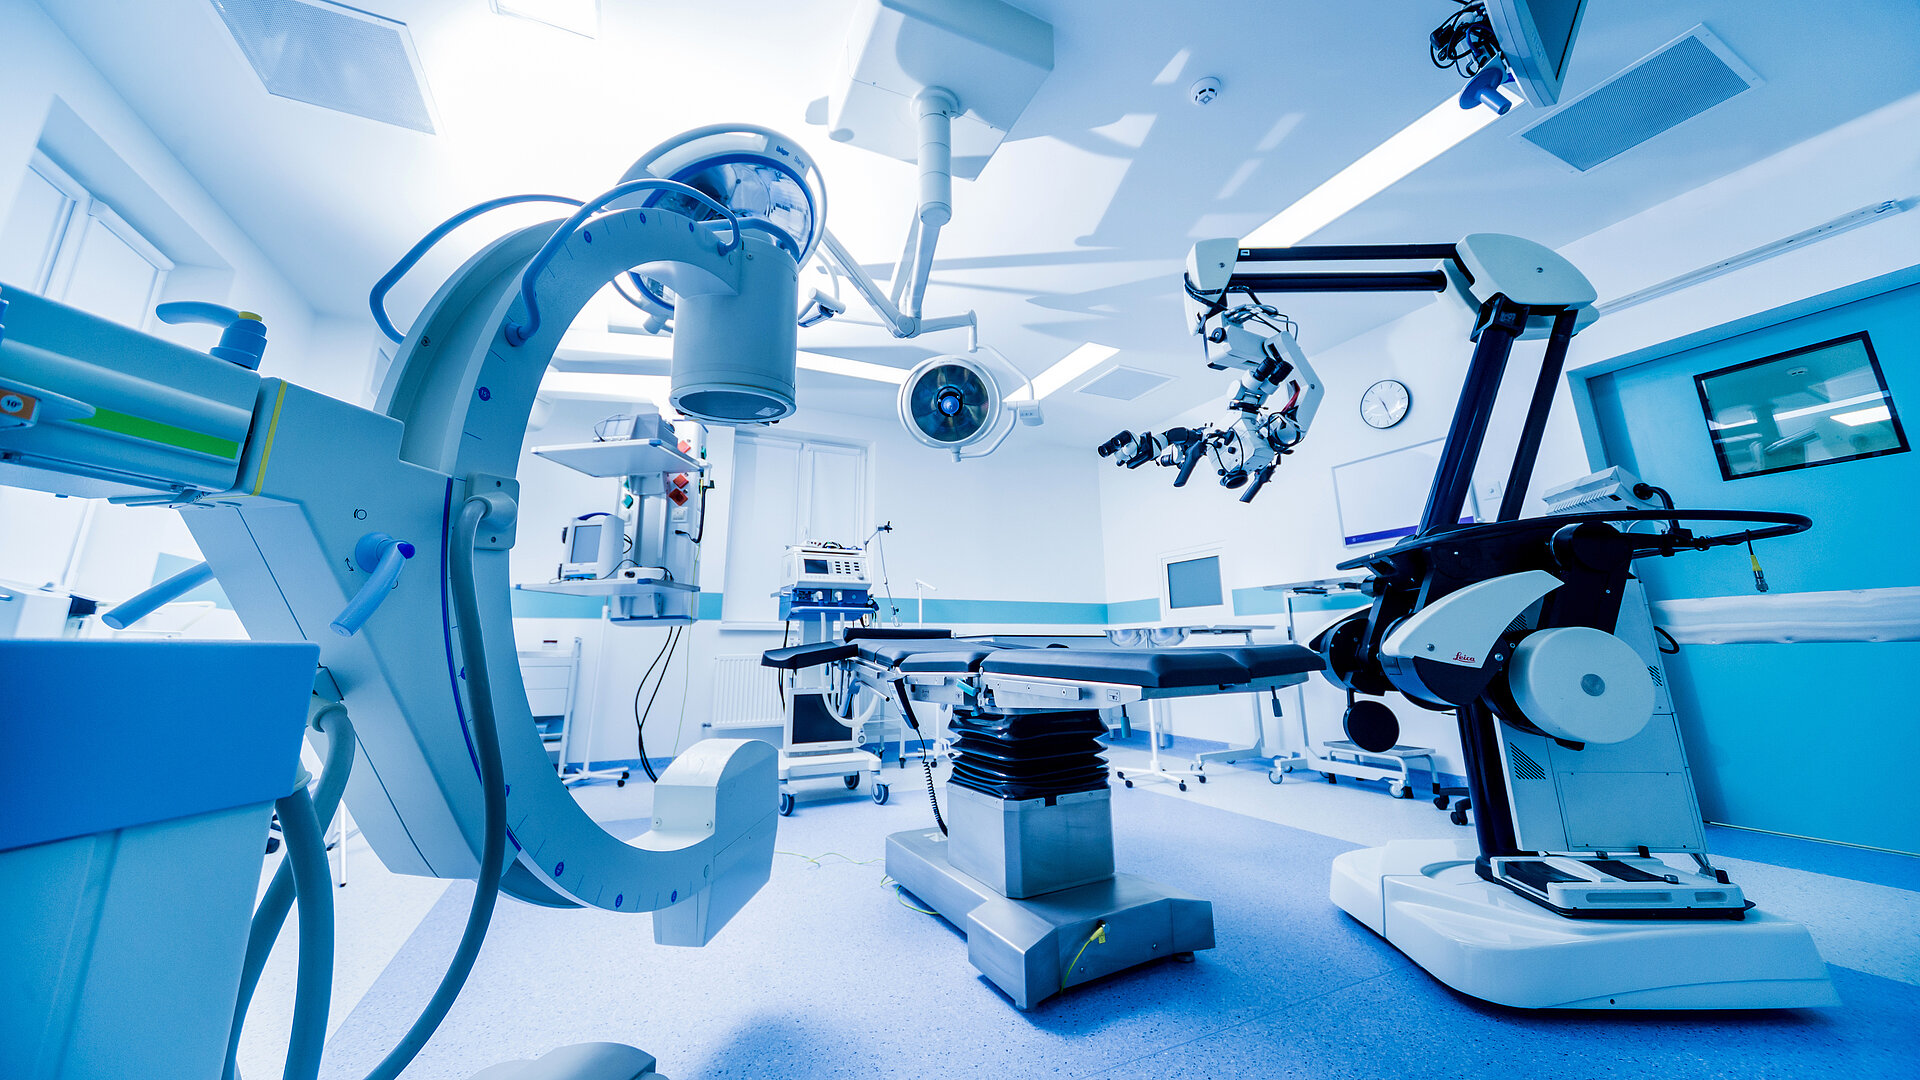 Ambulatory Surgical Center Market: Rising Demand for Outpatient Surgeries Drives Growth